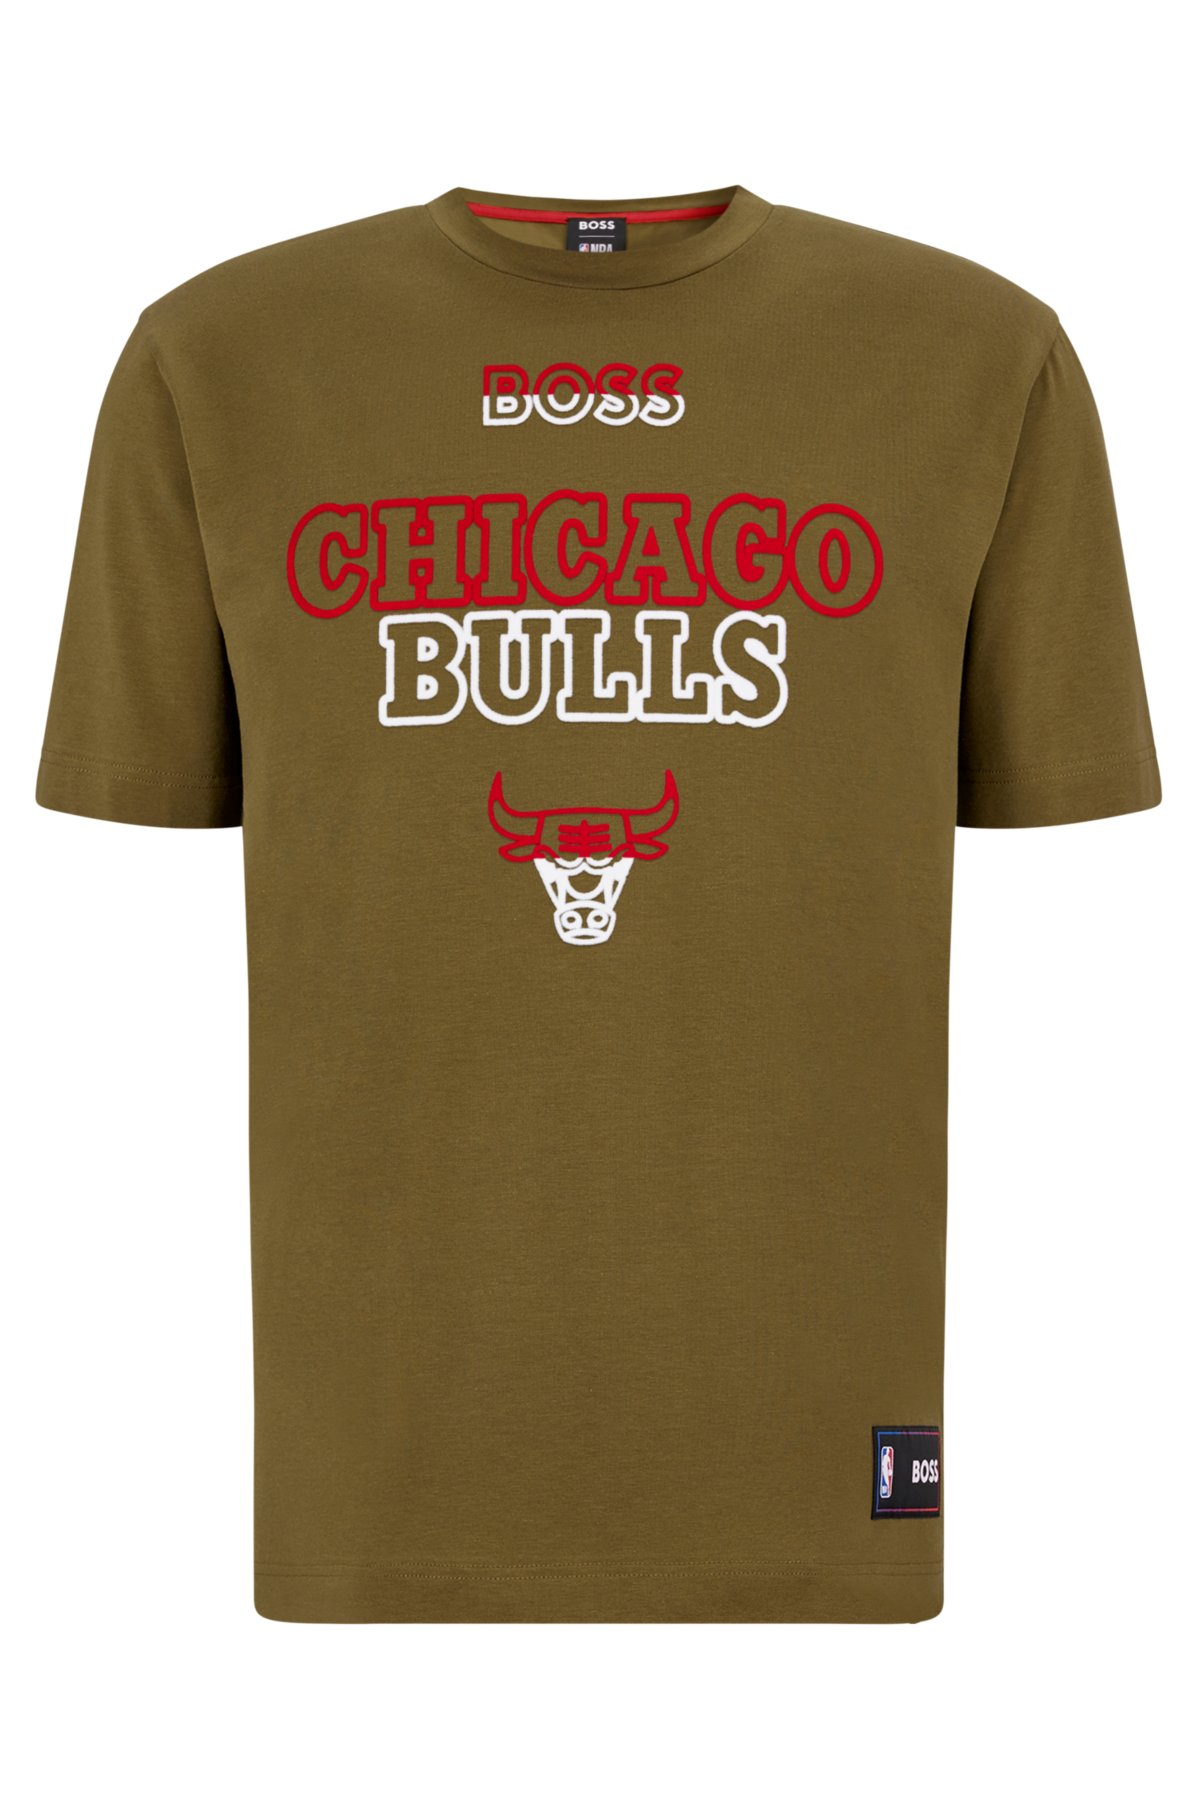 Official Men's Chicago Bulls Hugo Boss Gear, Mens Hugo Boss Bulls